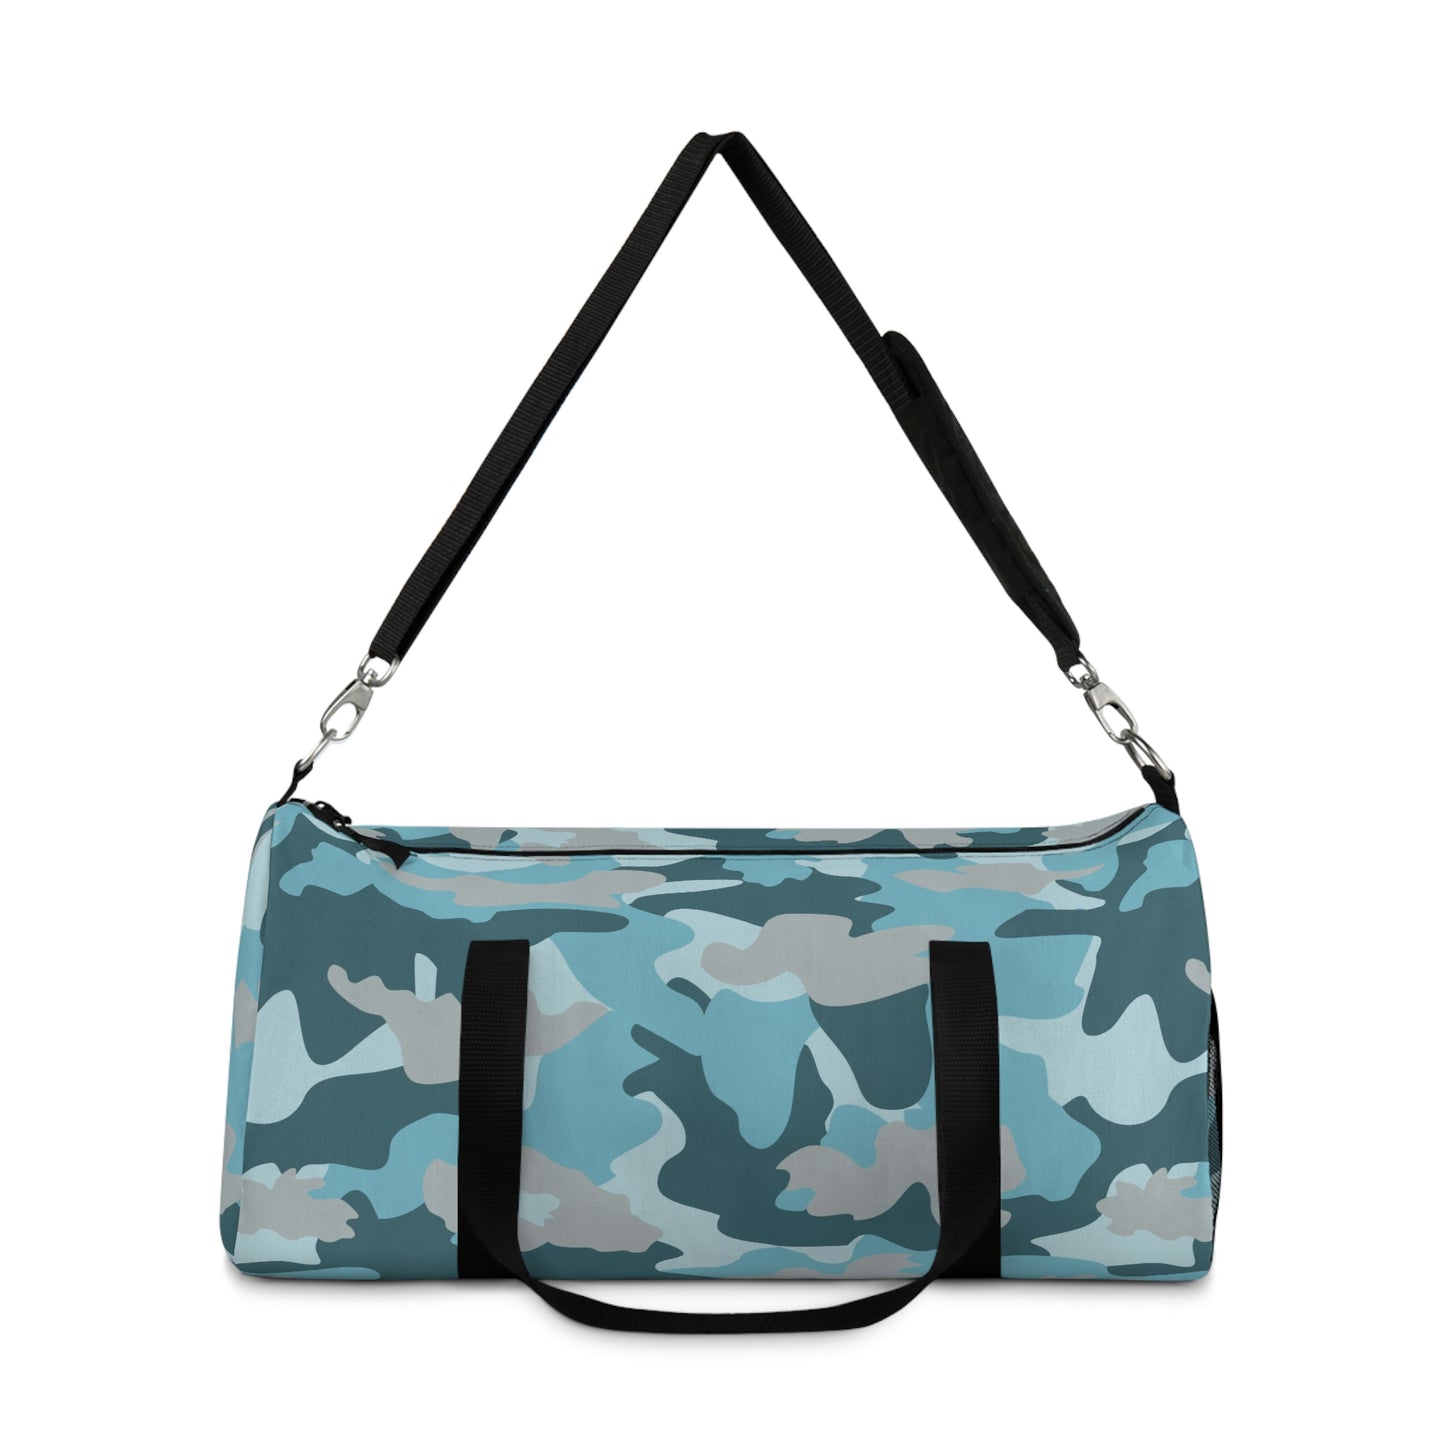 Camo Duffle Bag, Weekender Duffle Bag, Carry-on Travel Overnight Canvas Duffel Bag